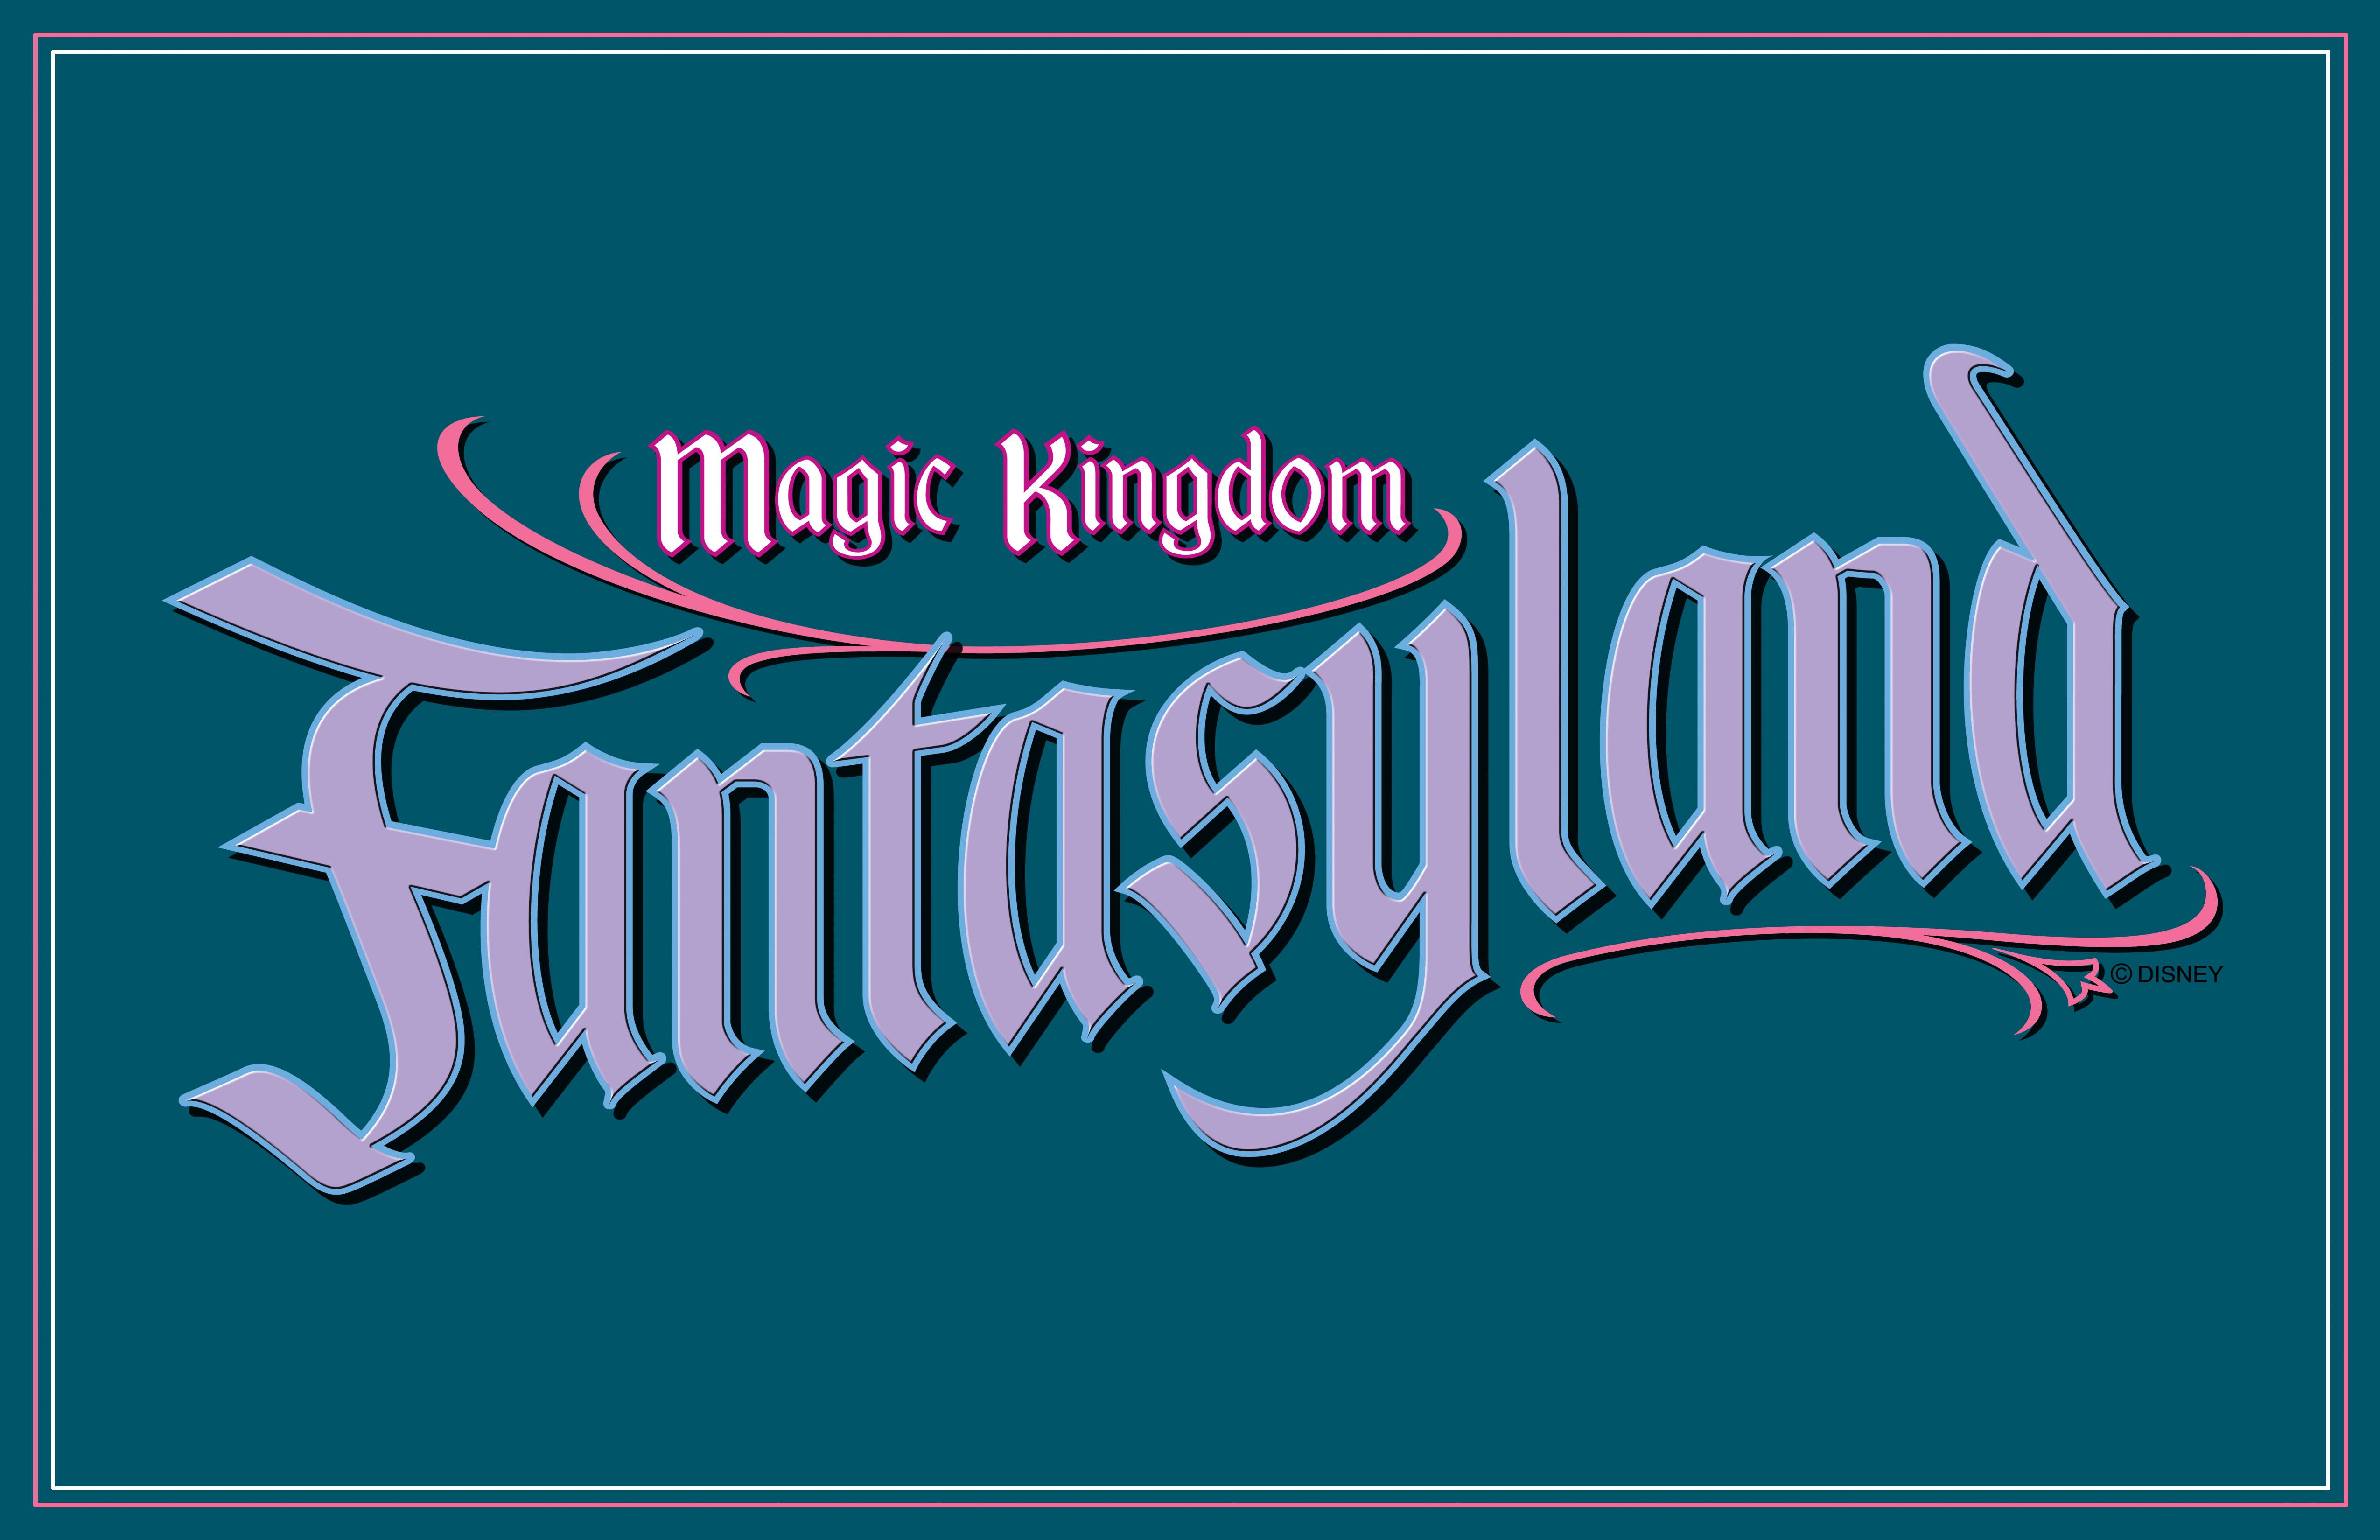 Fantasyland Logo - 22New Fantasyland%22 logo by Louis Lemoine, former Disney Imagineer ...